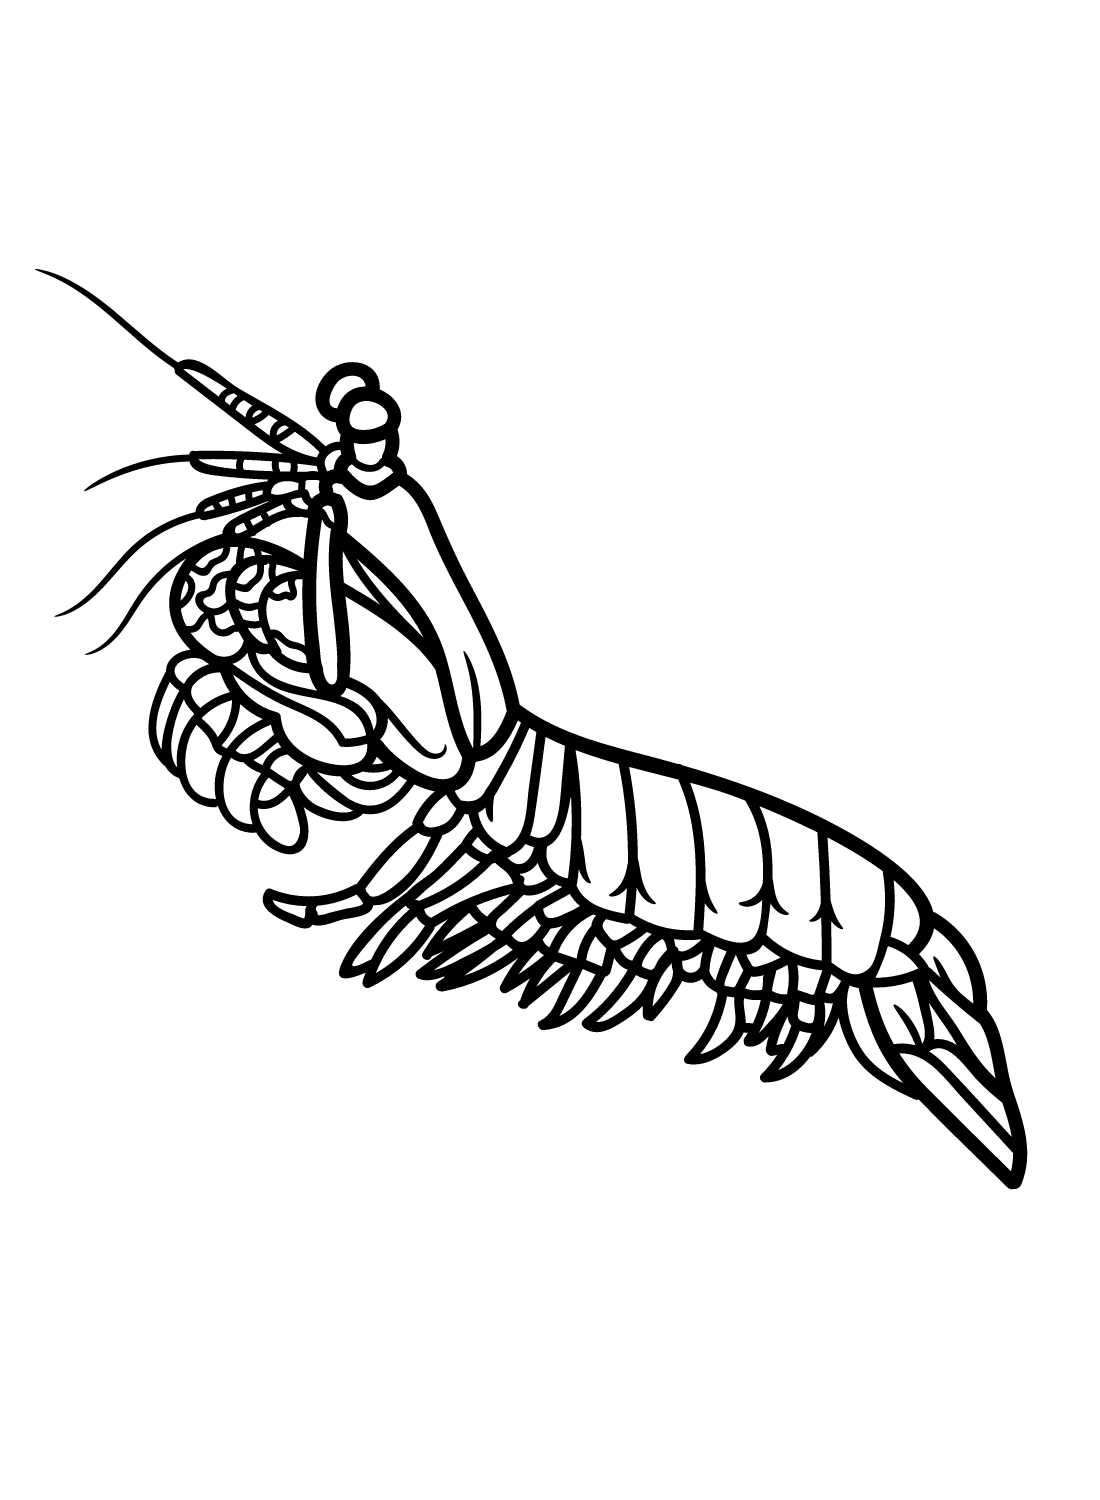 Free Printable Mantis Shrimp Coloring Page